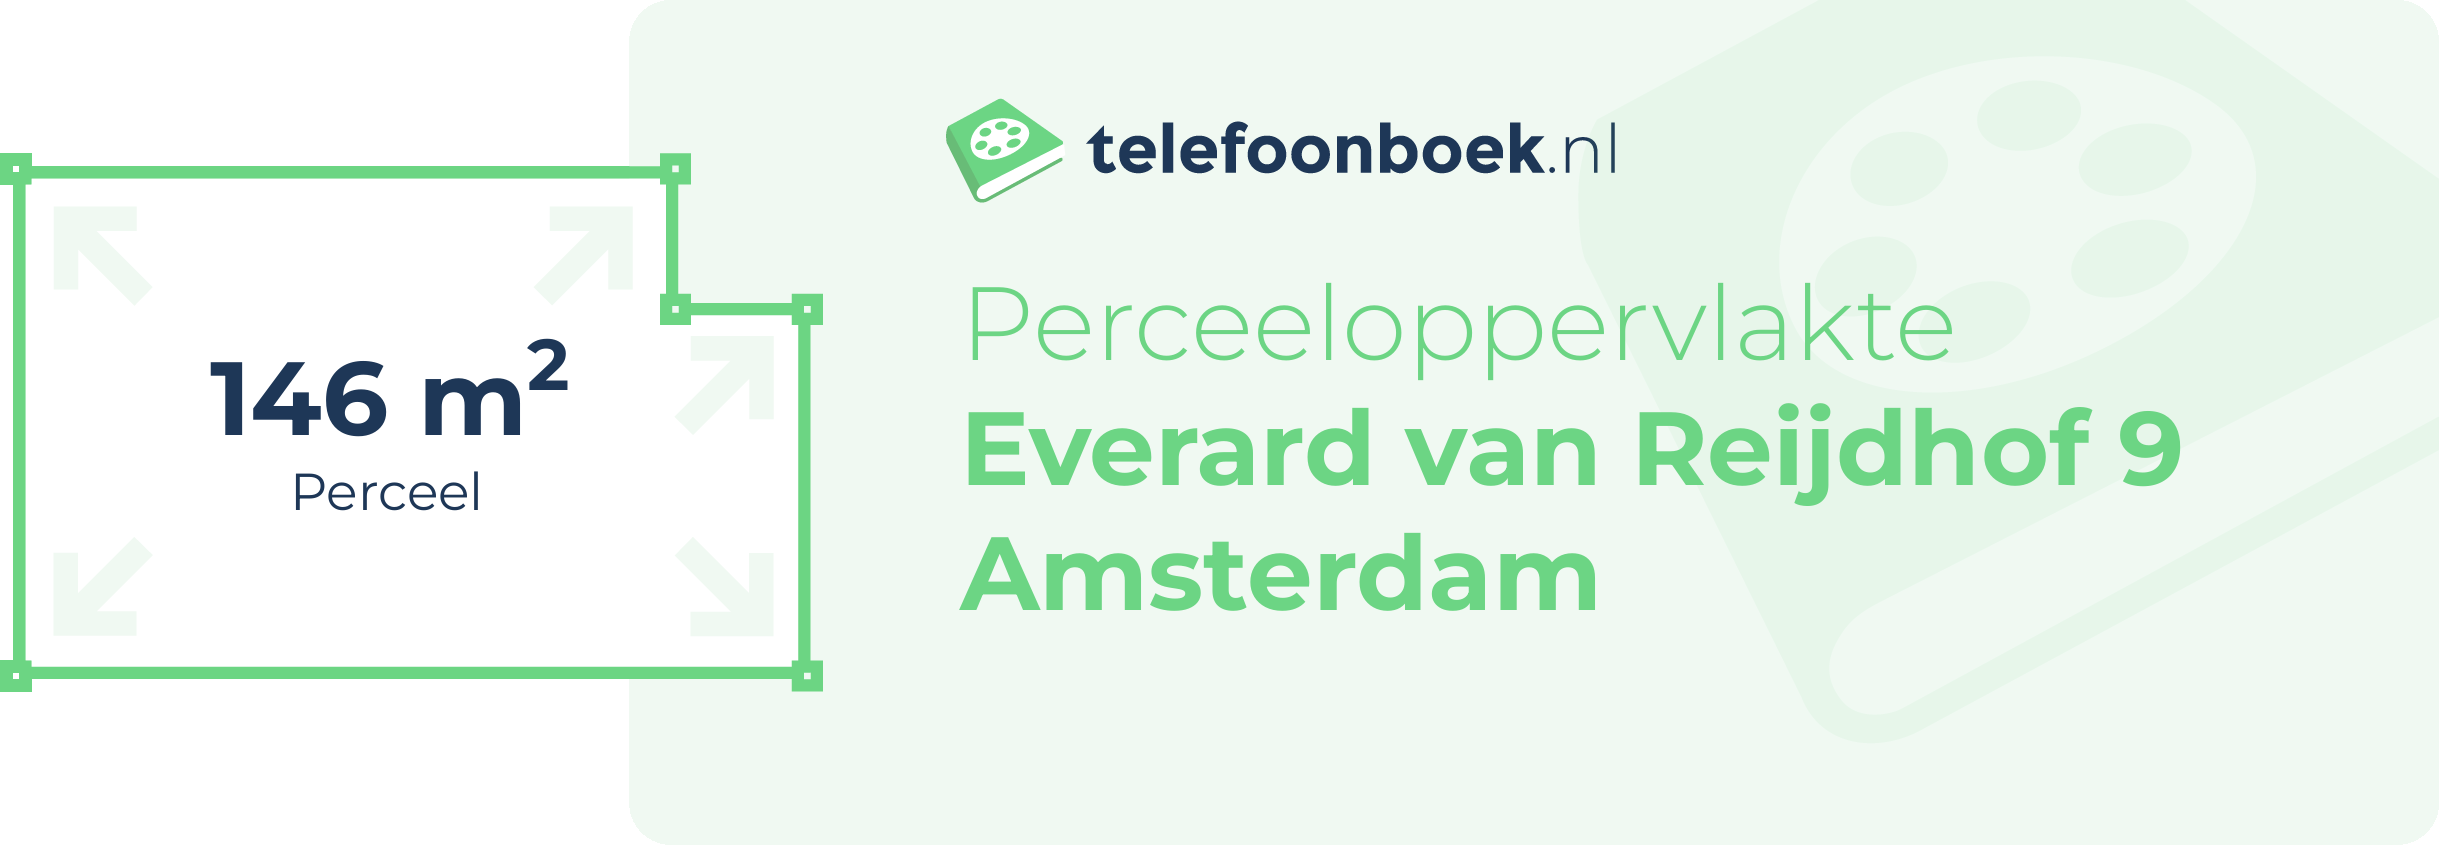 Perceeloppervlakte Everard Van Reijdhof 9 Amsterdam